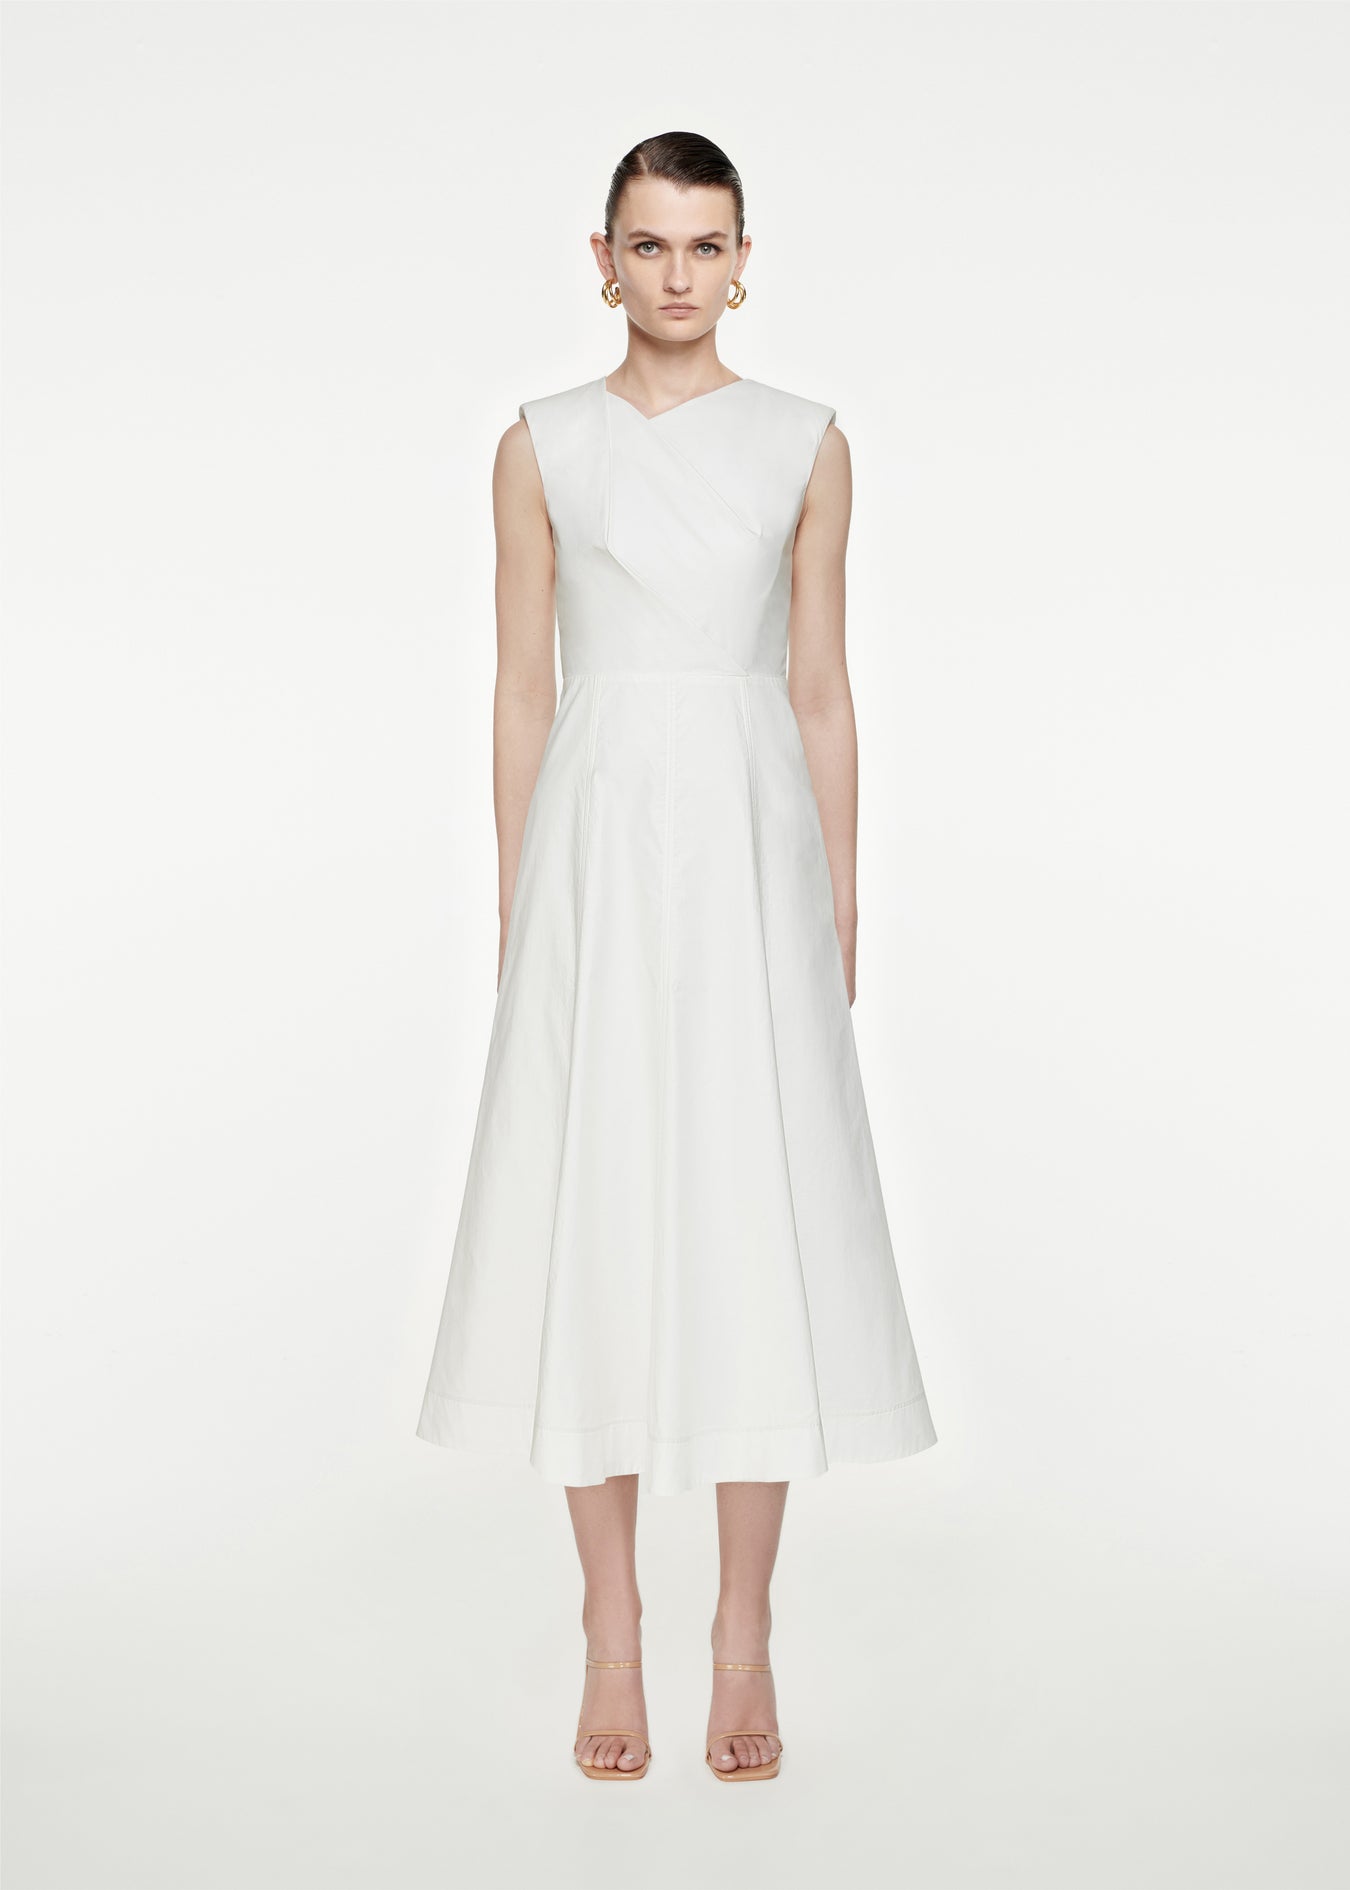 Woman wearing the Cotton Poplin Midi Dress in White